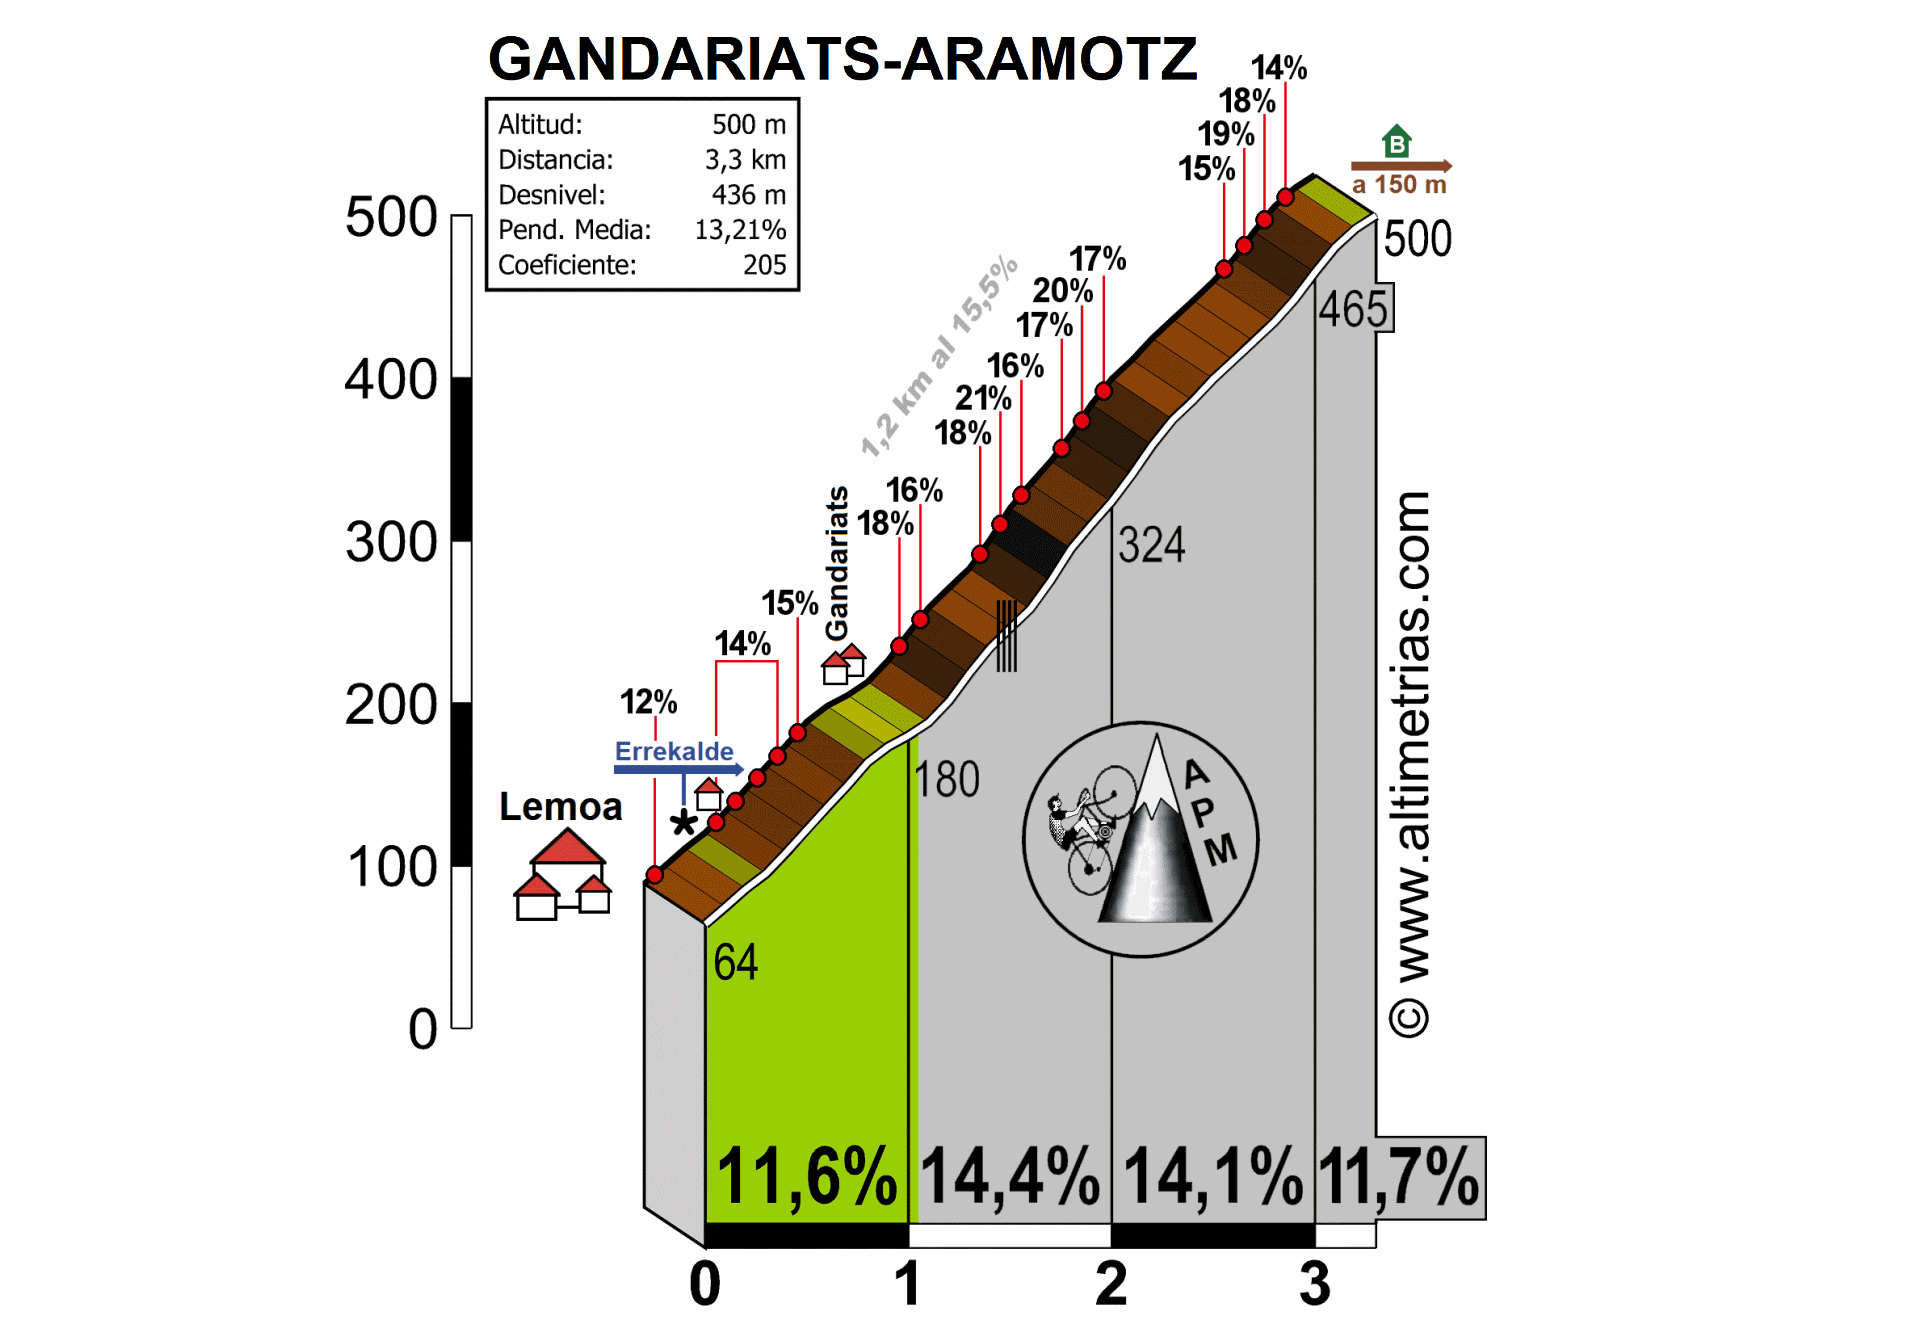 Gandariats-Aramotz